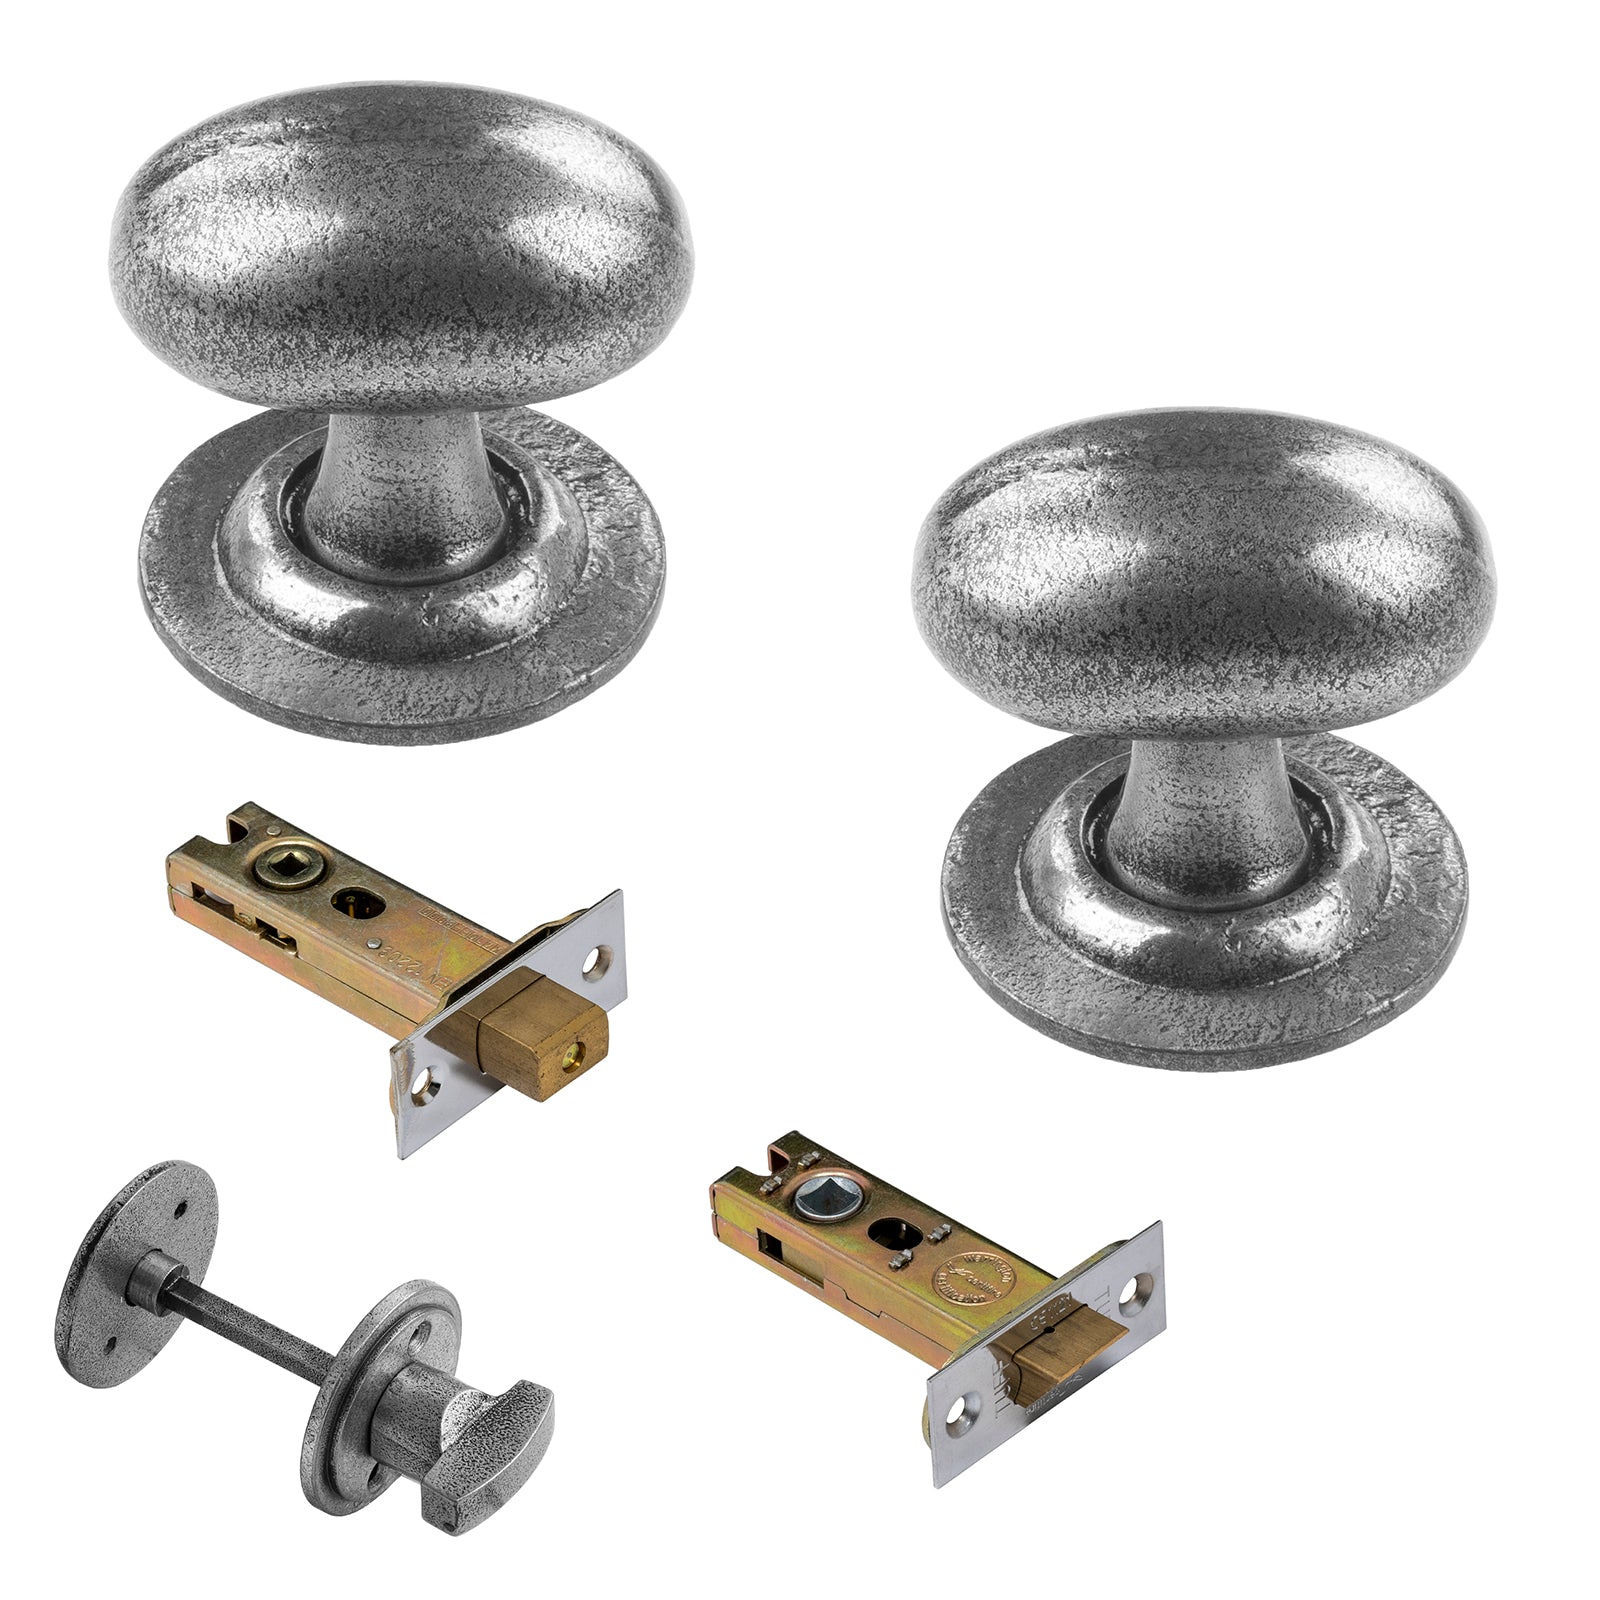 Oval cast iron pewter door knobs 3 inch bathroom set